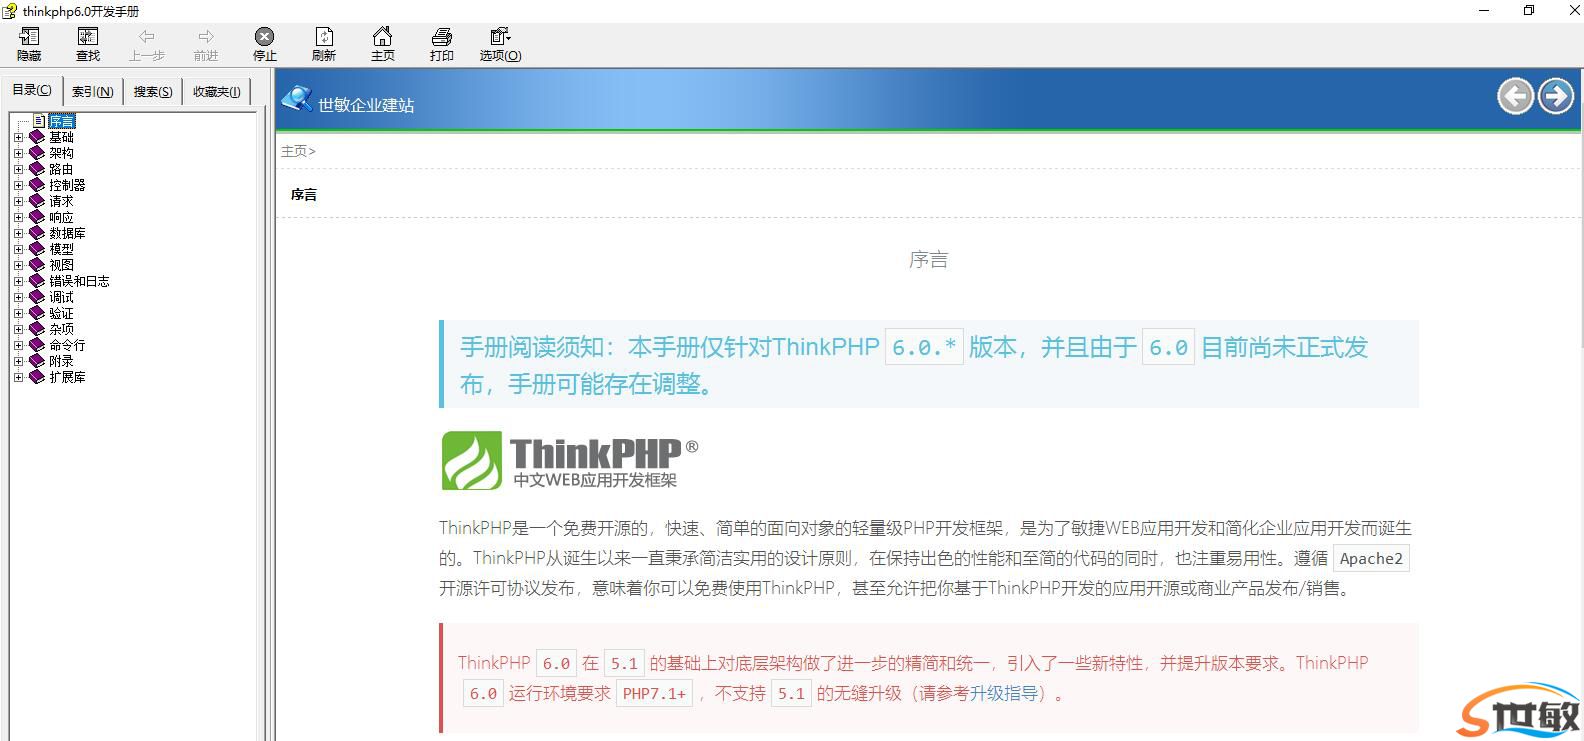 thinkphp 6.0开发手册(1)